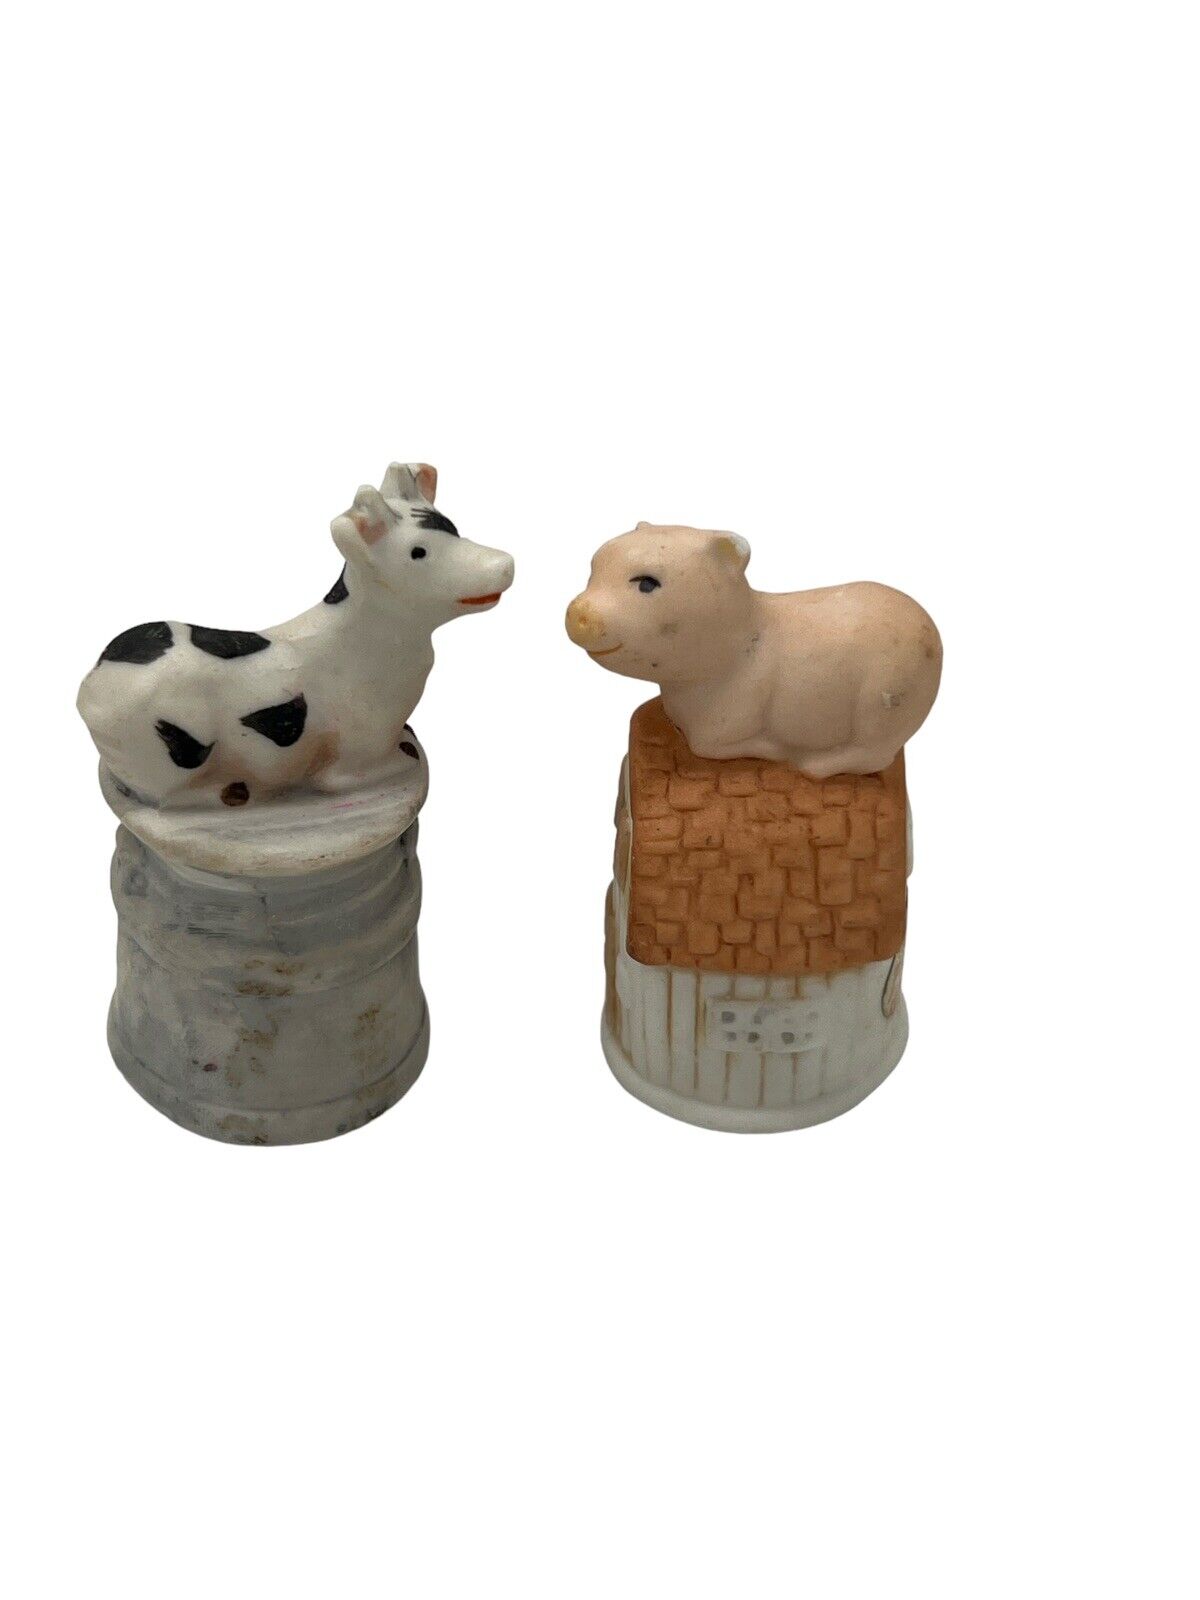 Vintage 1980s Enesco Cow and Pig Porcelain Thimbles Figurines 2”